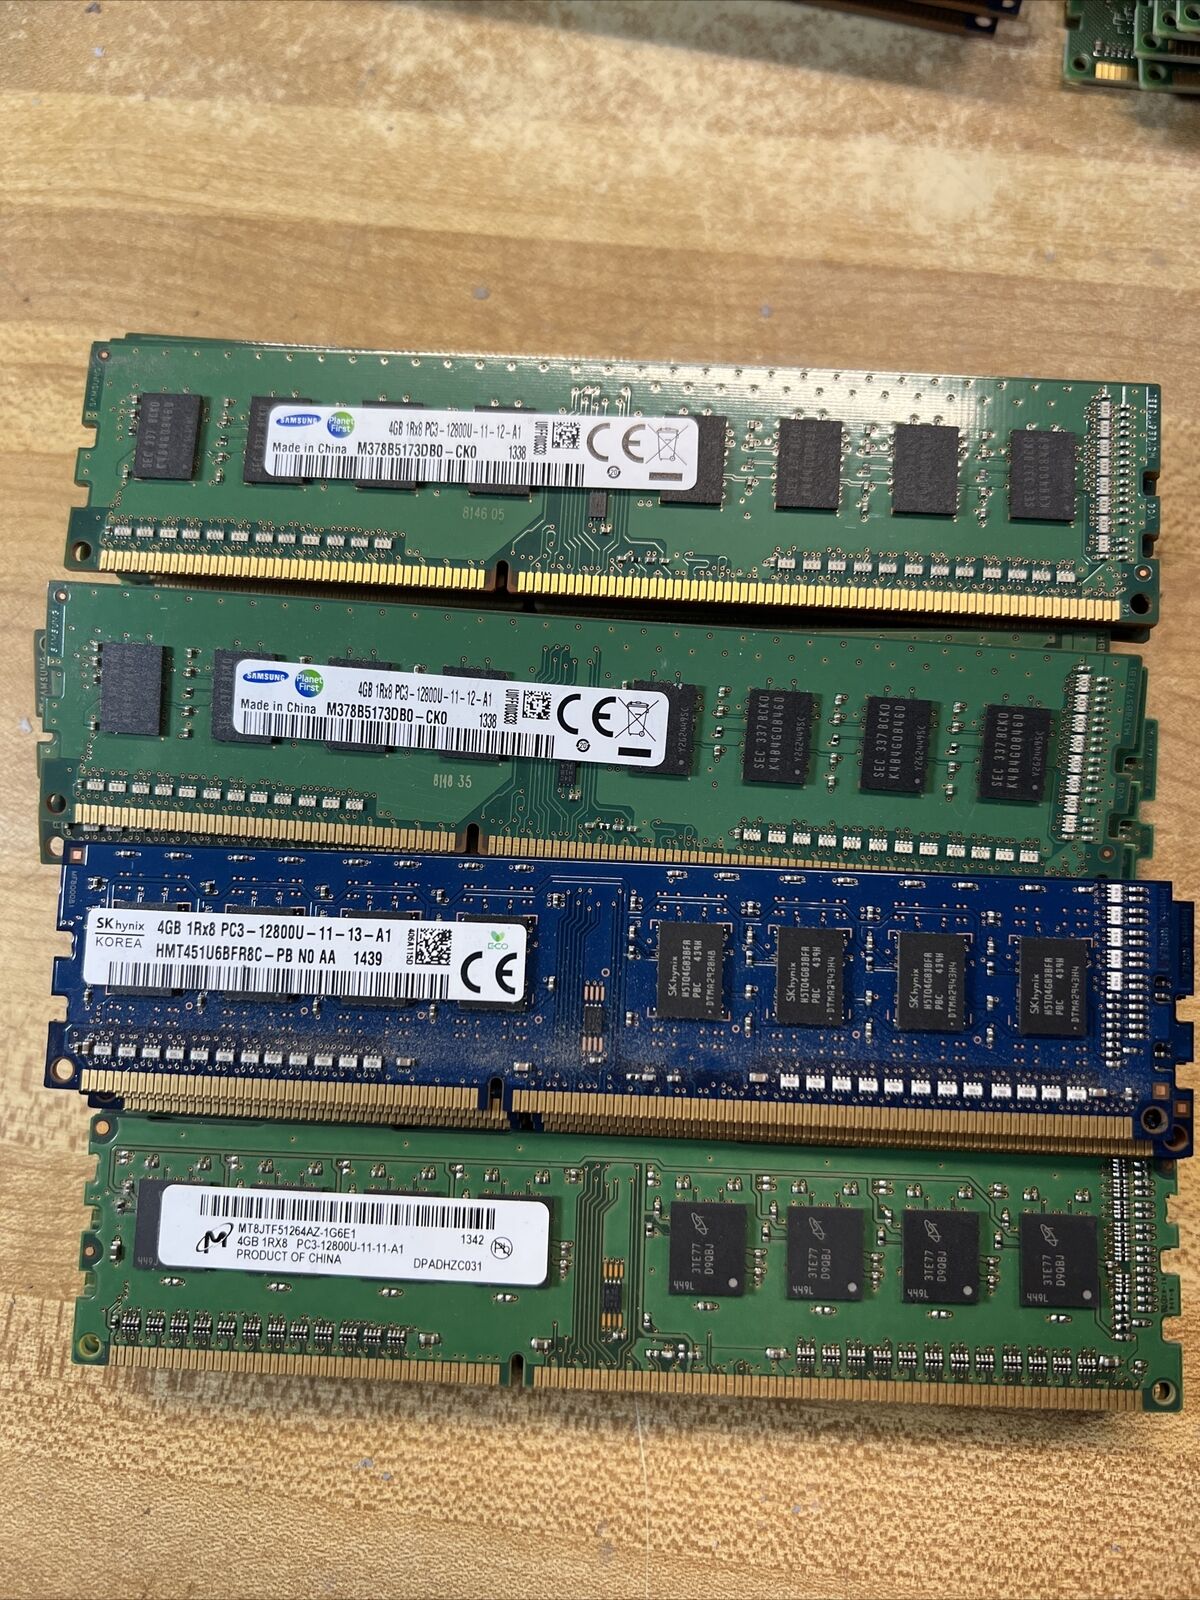 Samsung / SK Hynix / micron 4GB 1RX8 PC3-12800U *LOT OF 44* memory ram computer